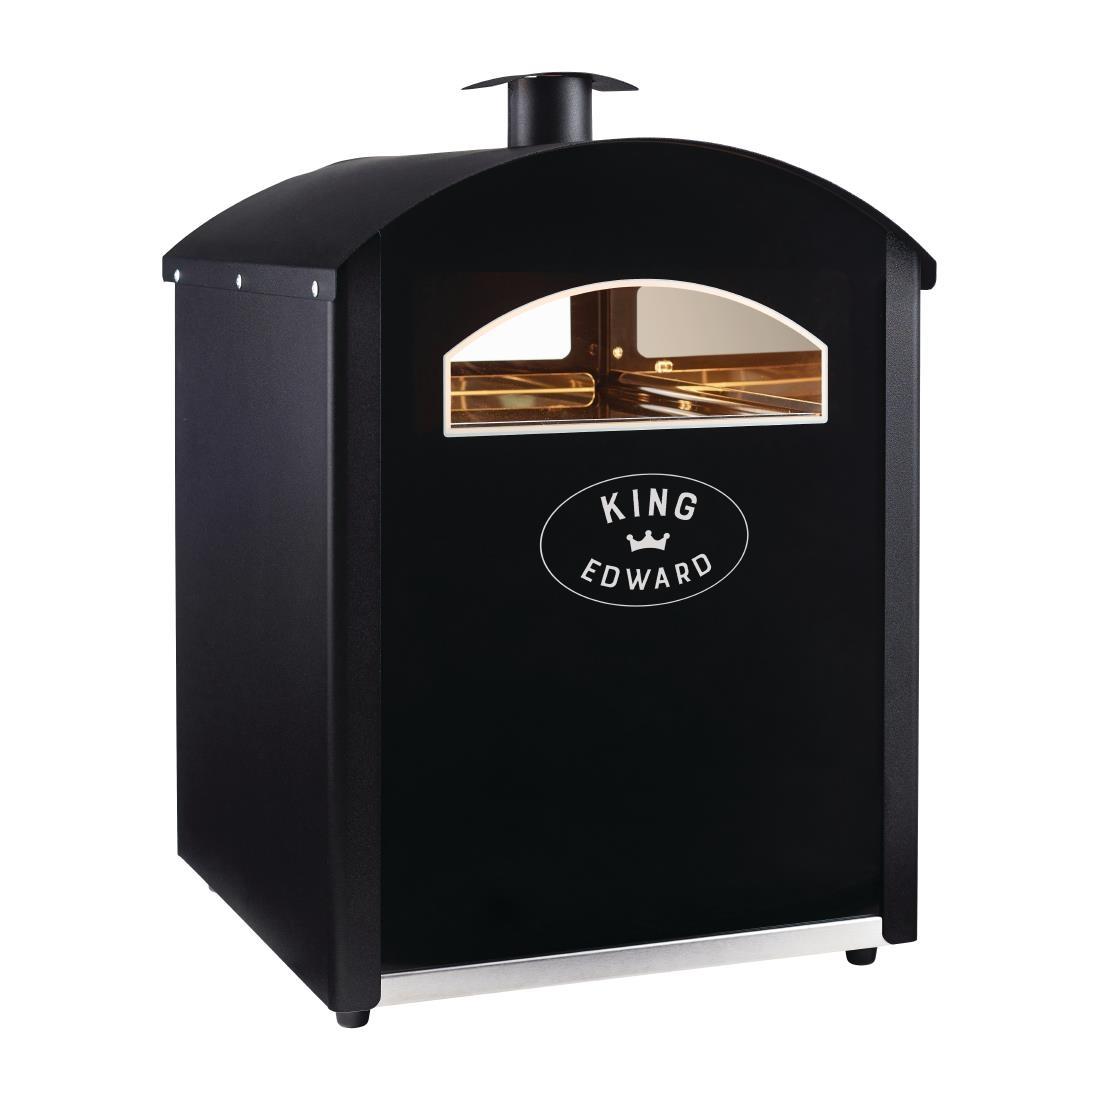 King Edward Classic 25 Potato Oven Black CLASS25/BLK - GP262  - 2